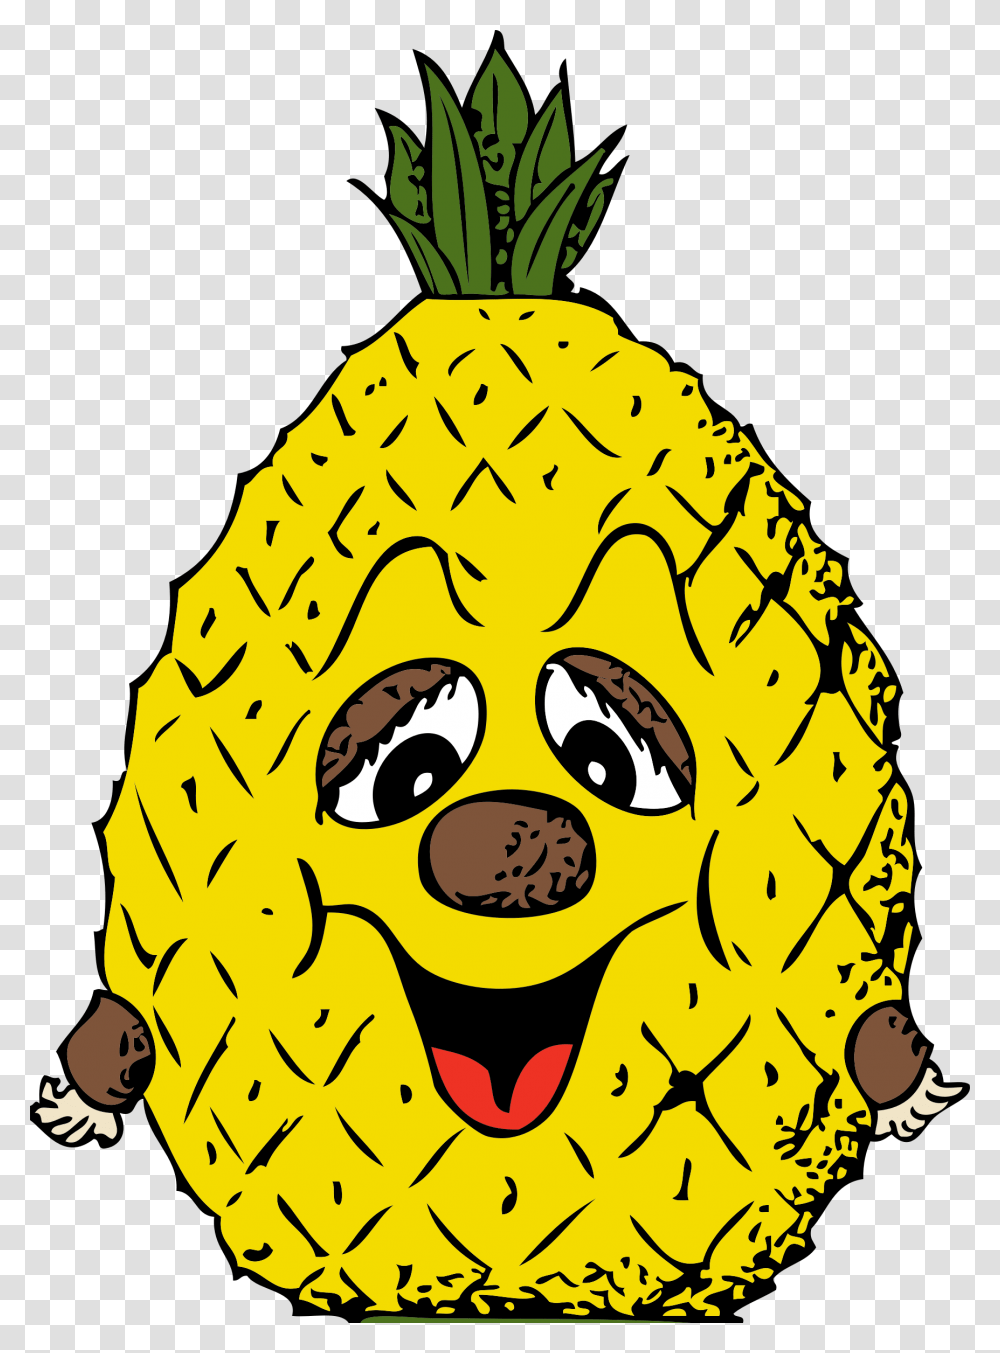 Blog Pineapple Clipart Free Clip Art Images Image 9 Cartoon Pineapple, Plant, Food, Fruit Transparent Png